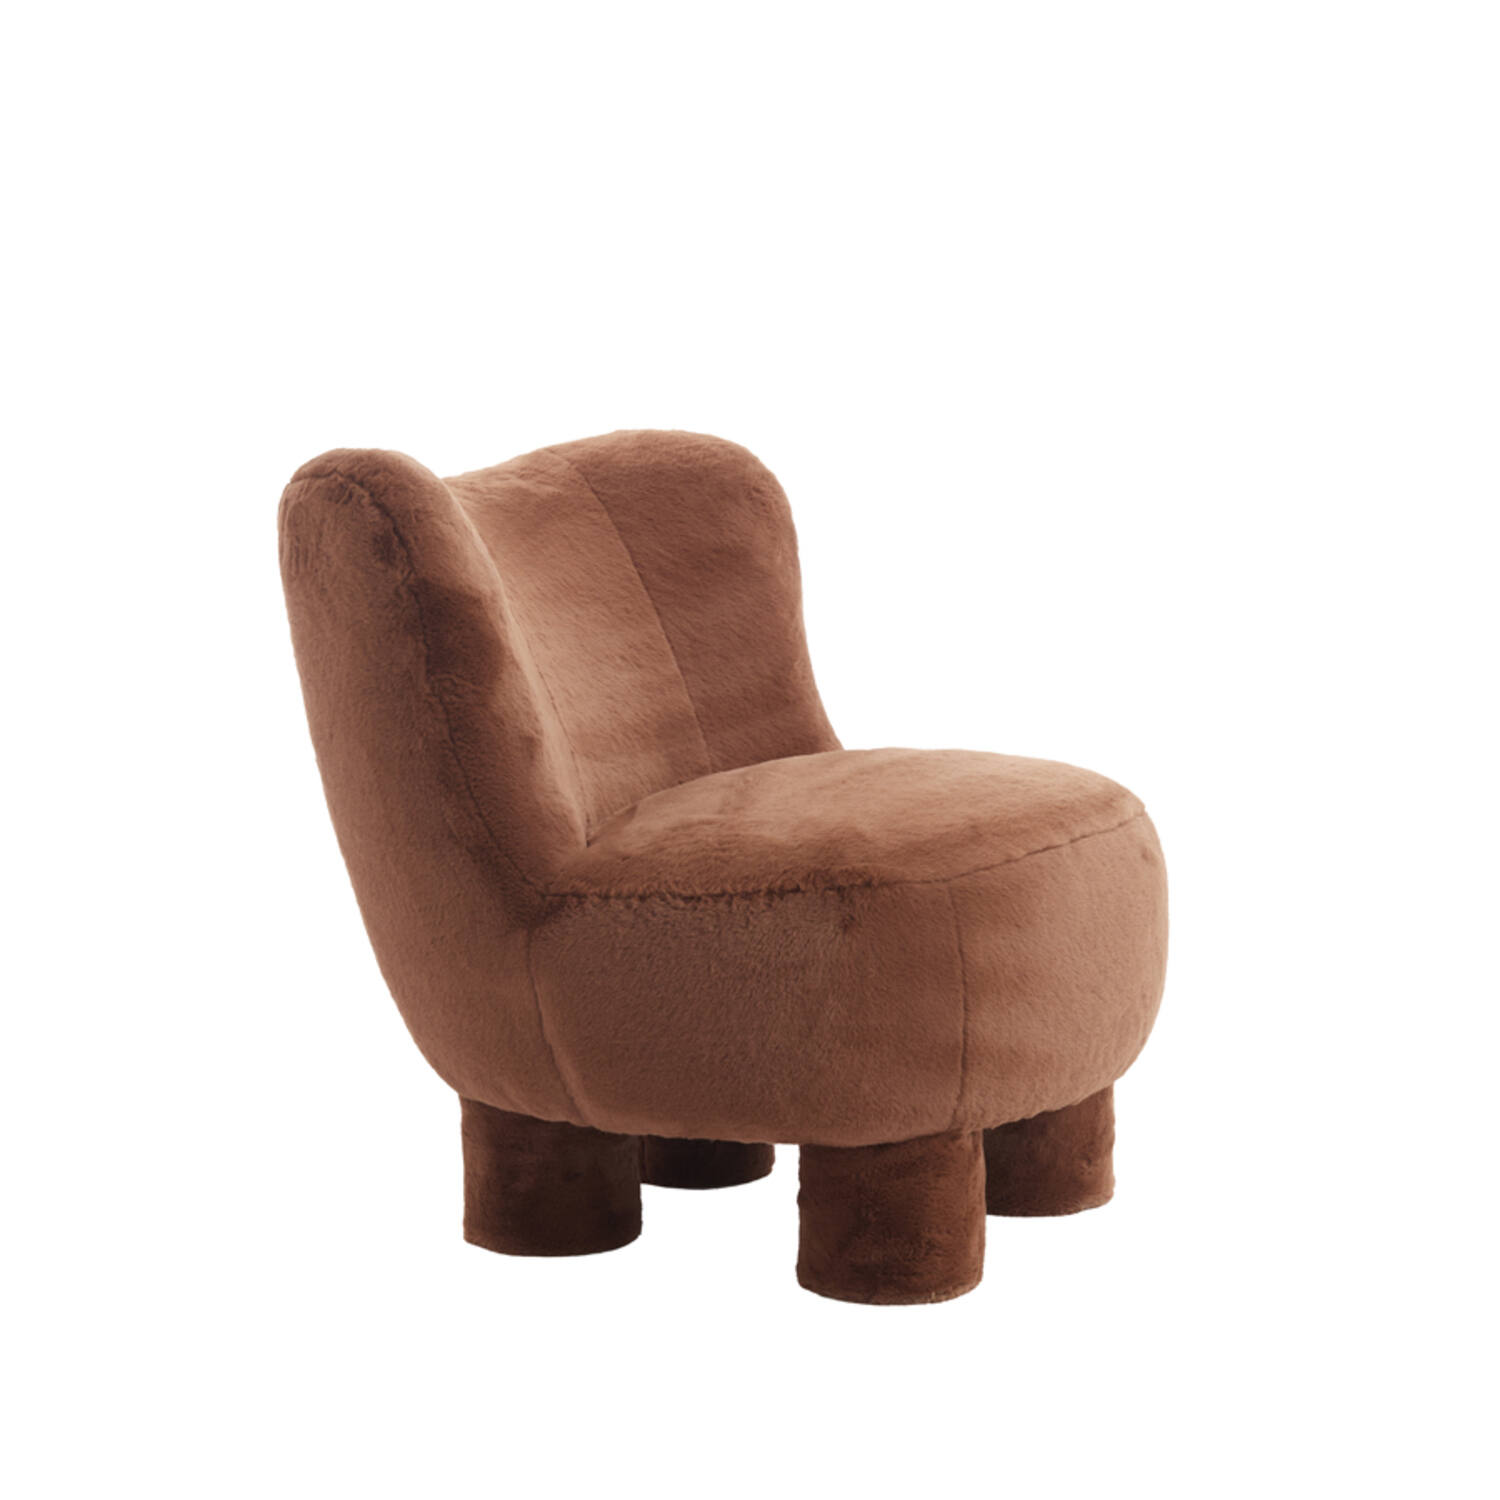 Chair 79x76x77 cm KAMOVU brown